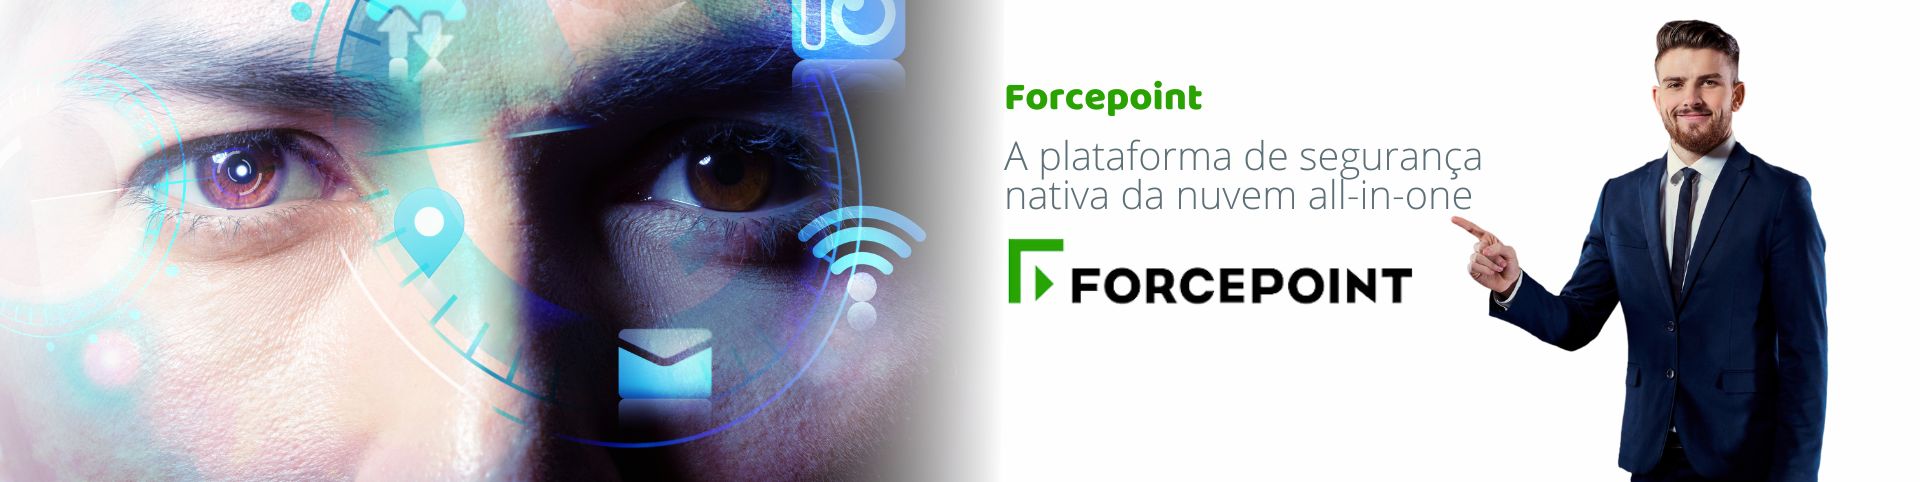 NetSol_Forcepoint